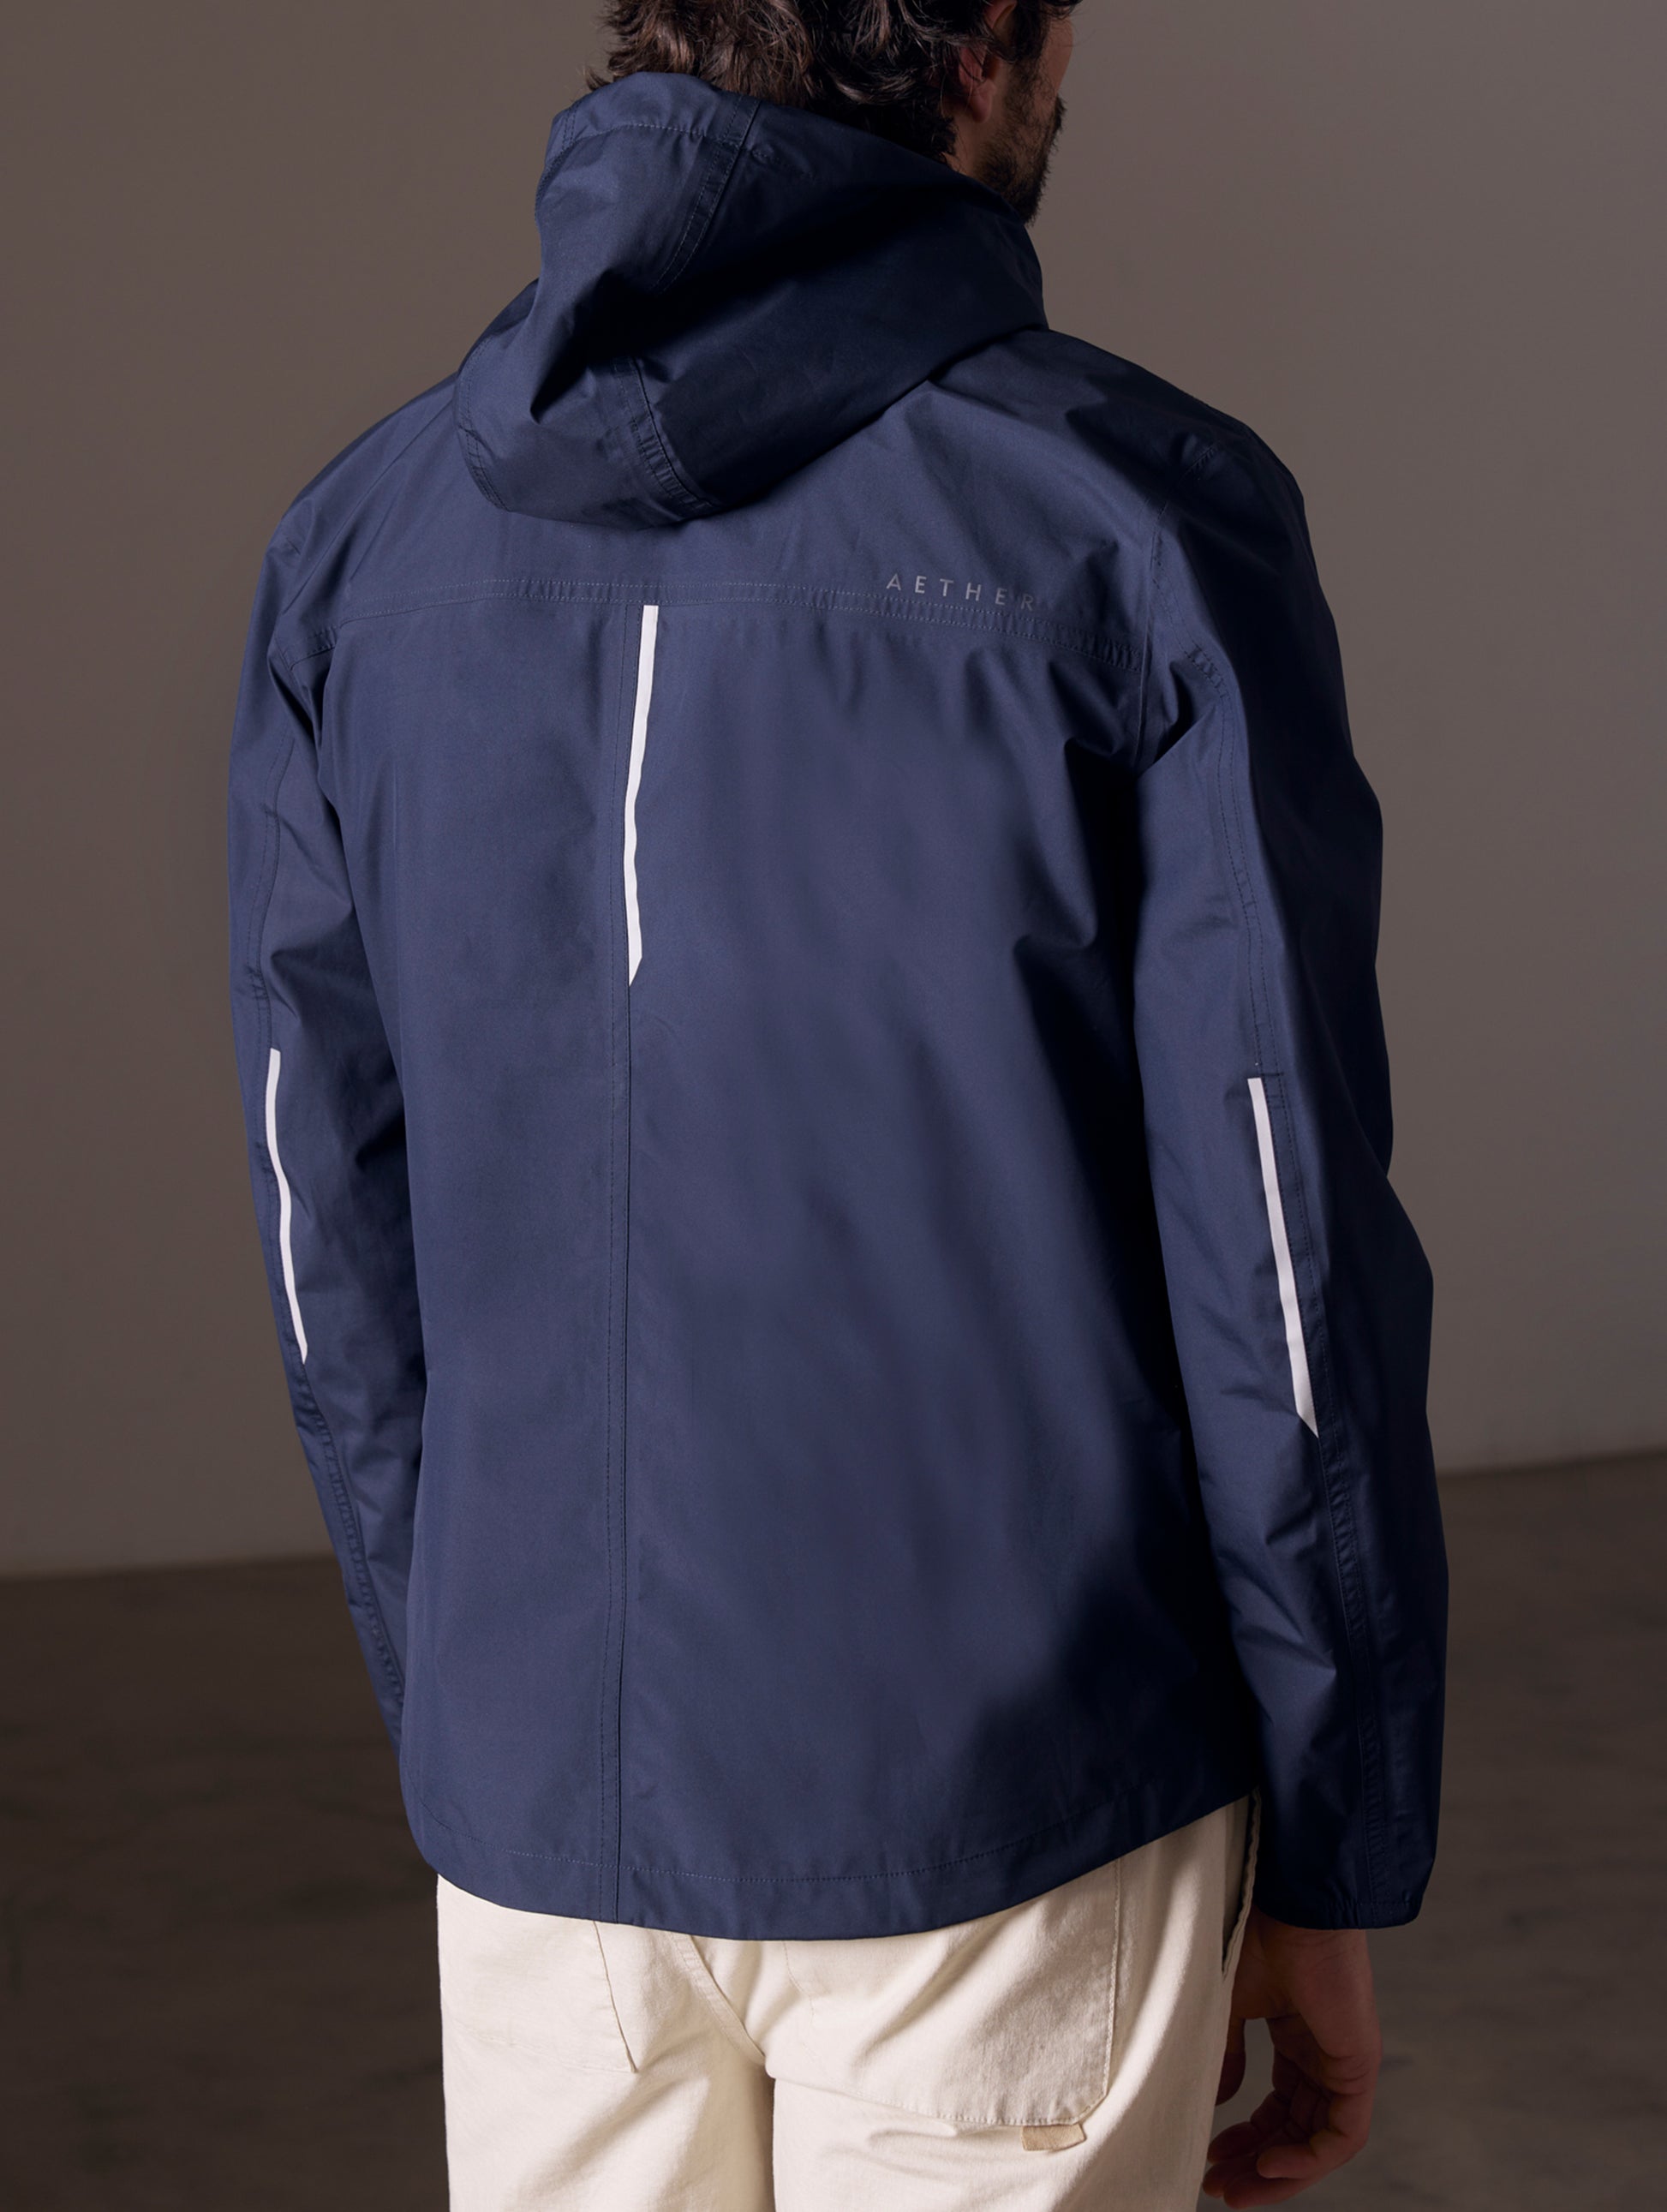 back view of man wearing blue waterproof jacket